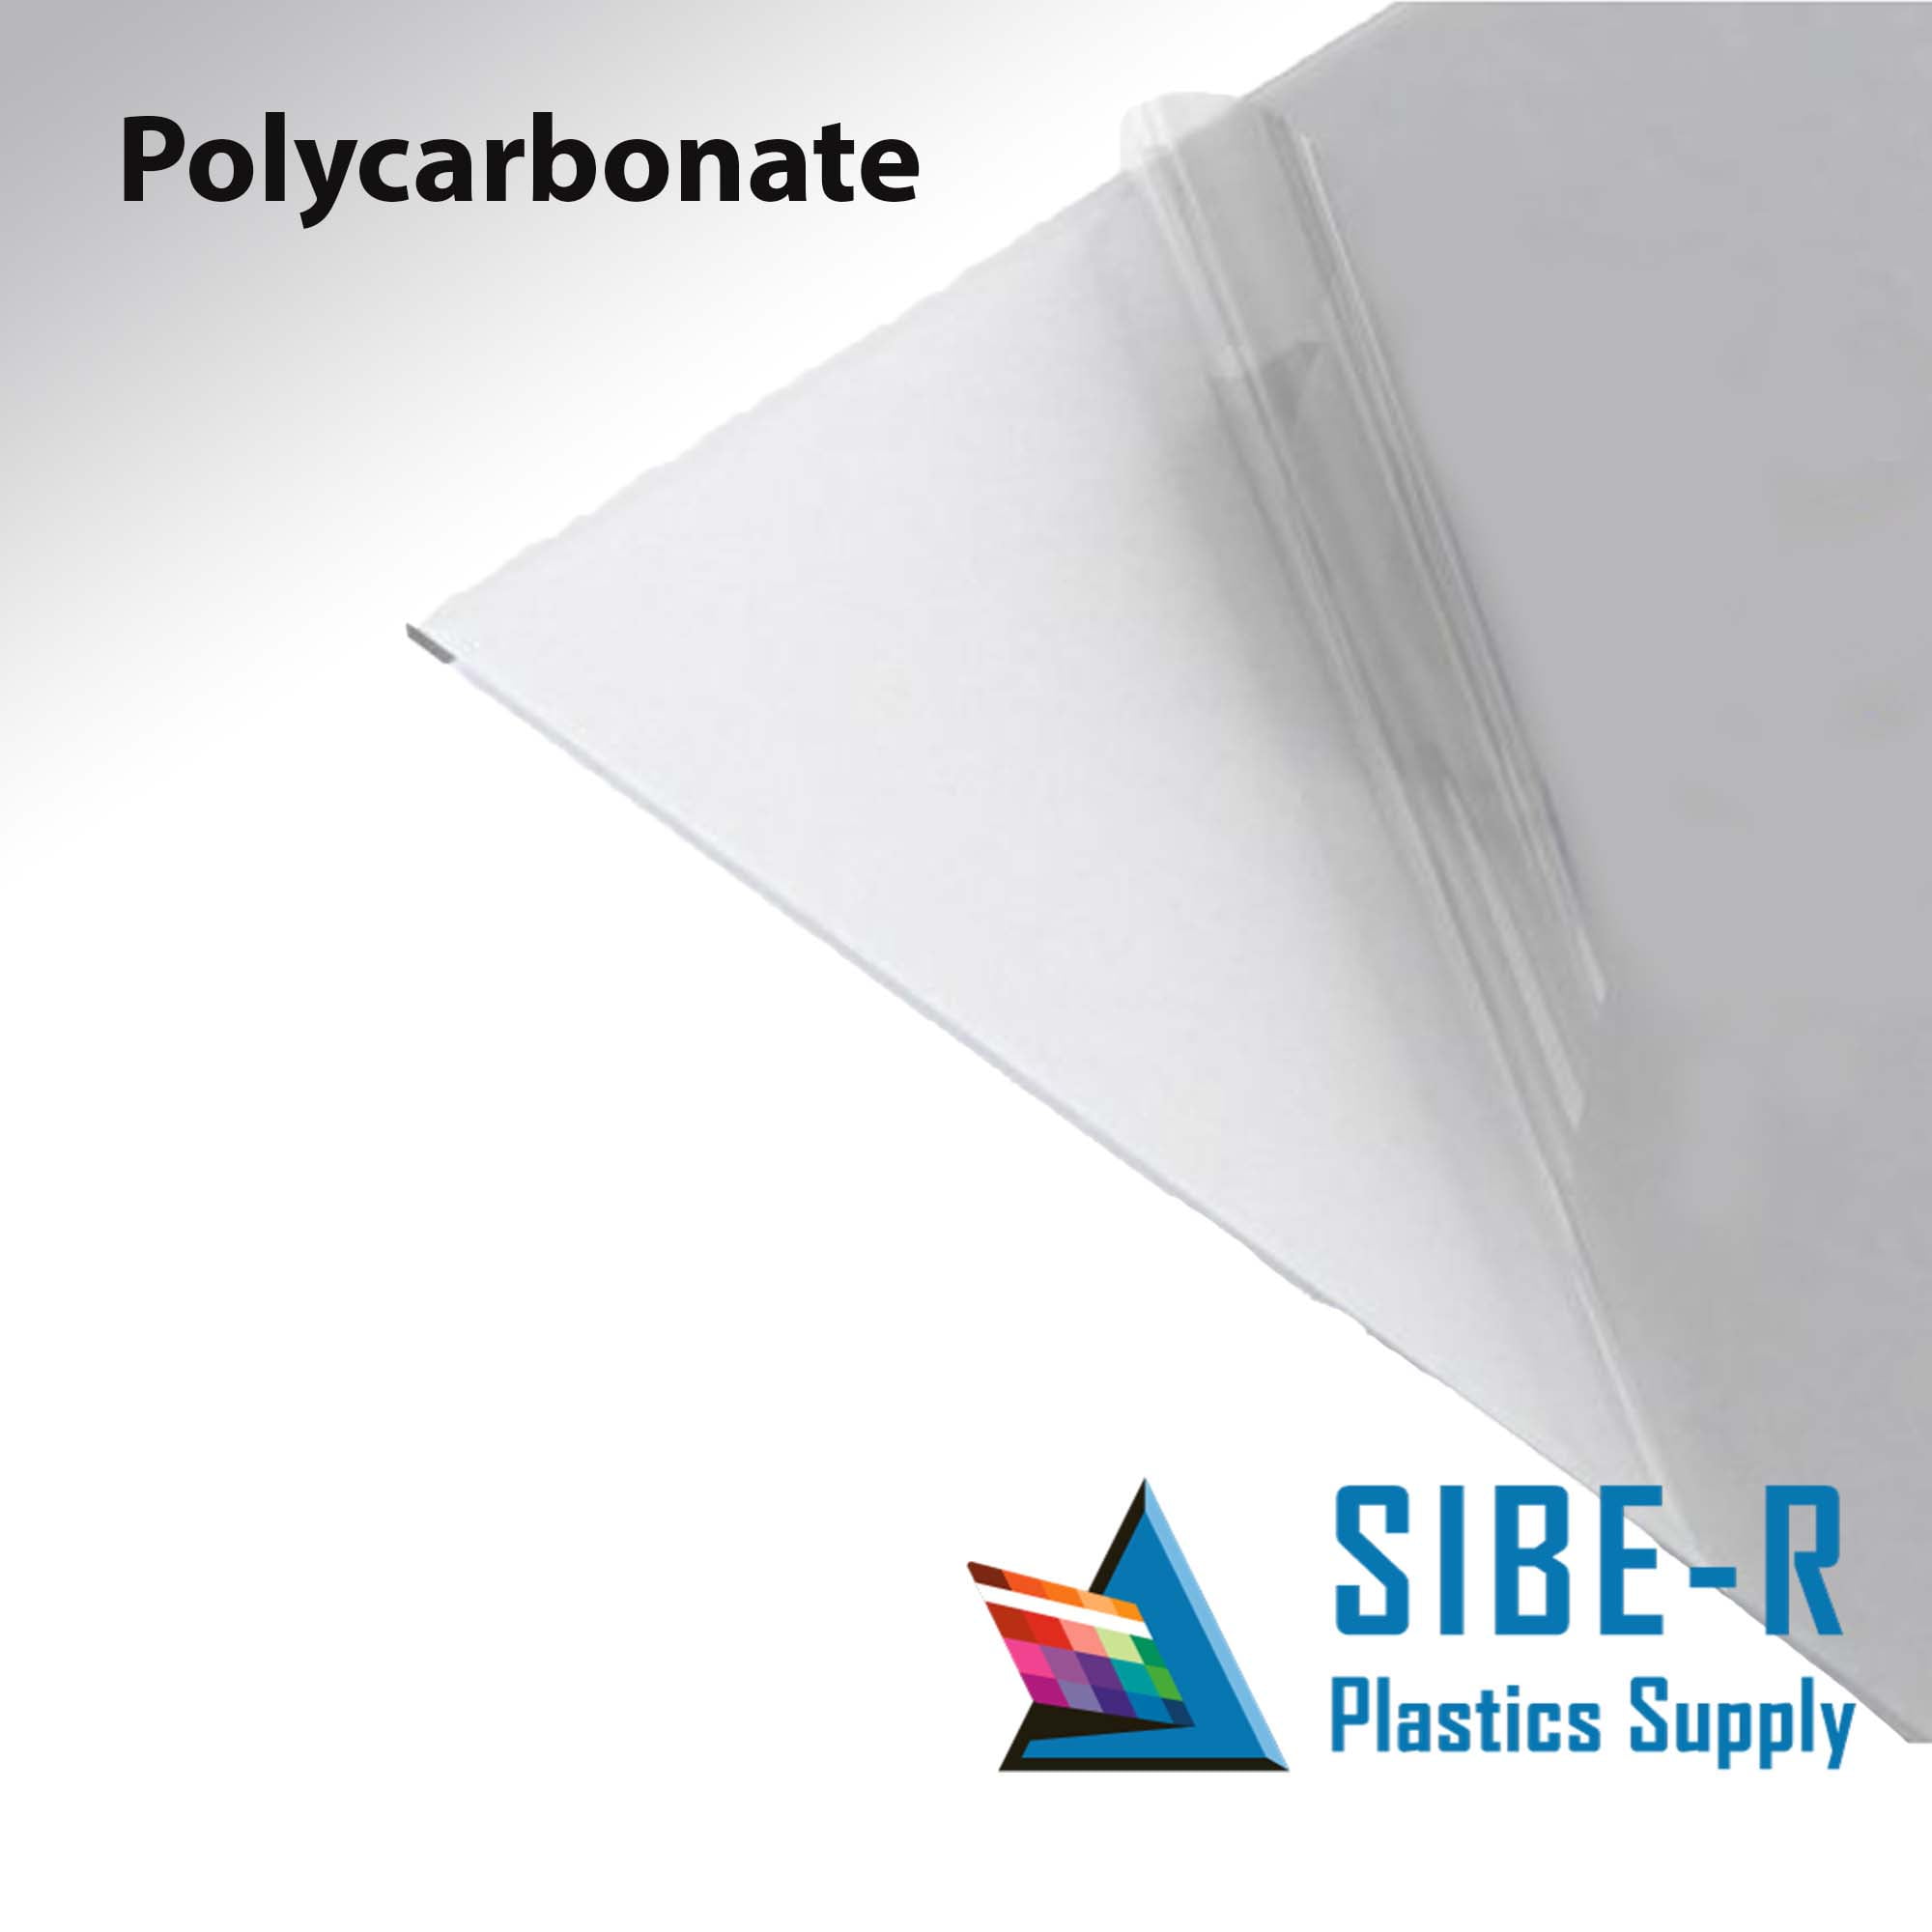 1/16 / 0.060 Thick Polycarbonate 1 Pack Comparable to Lexan/Tuffak KastLite Polycarbonate Sheet Nominal 1 x 2 